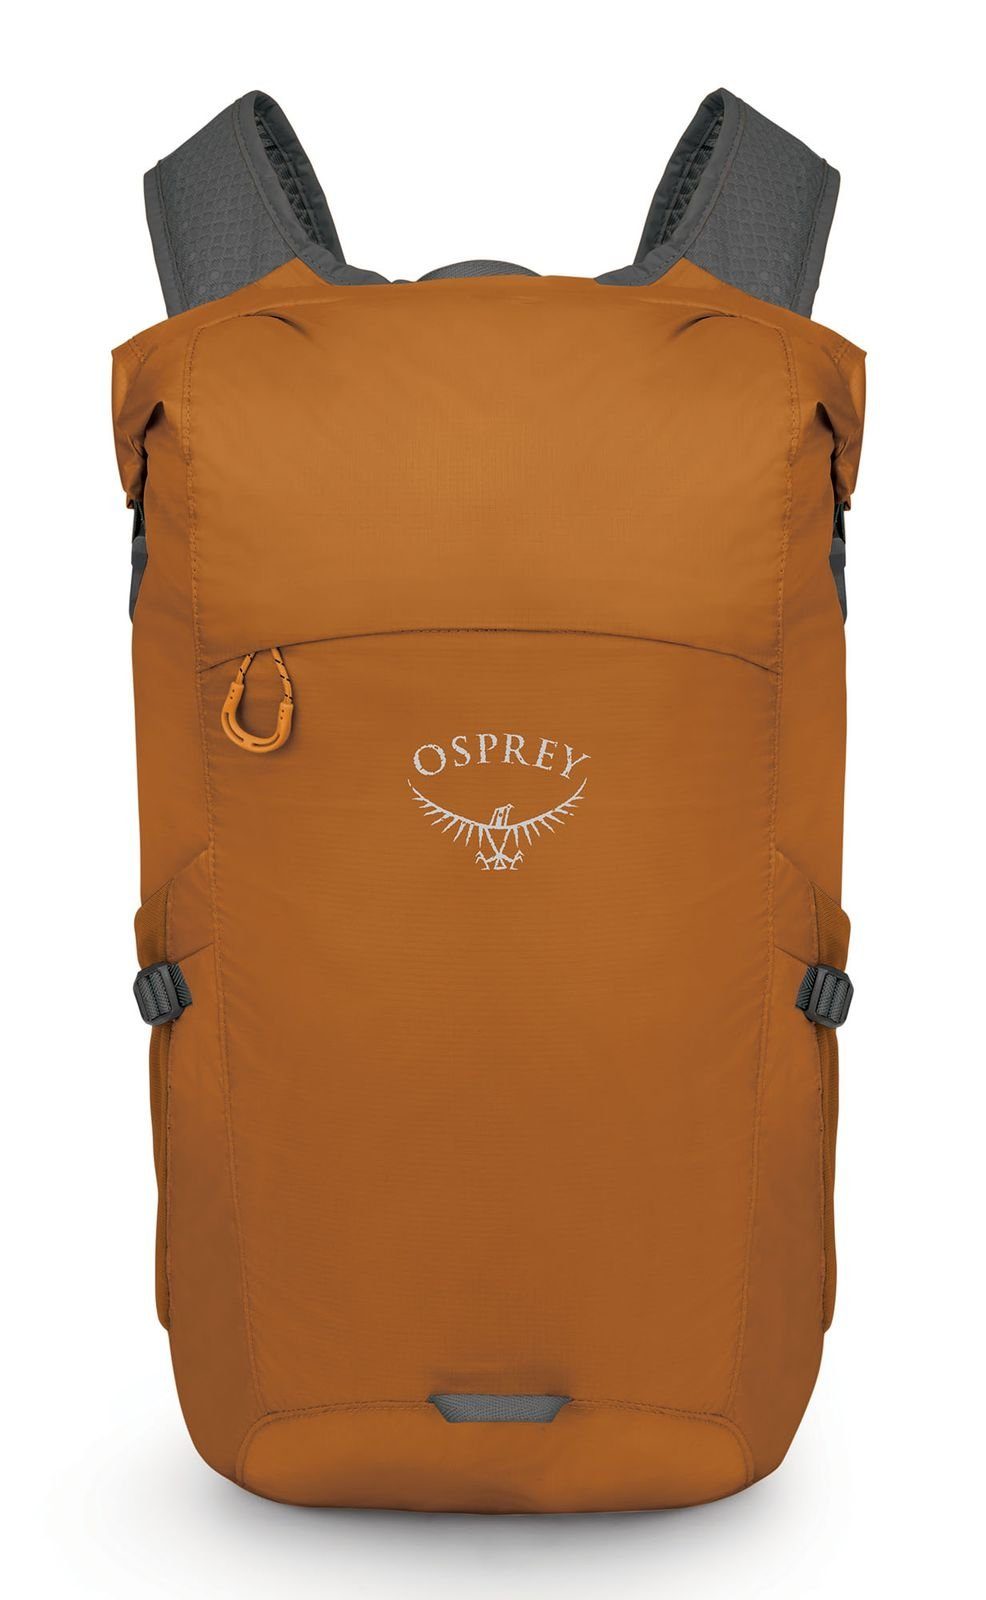 Osprey Rucksack Toffee Ultralight Orange